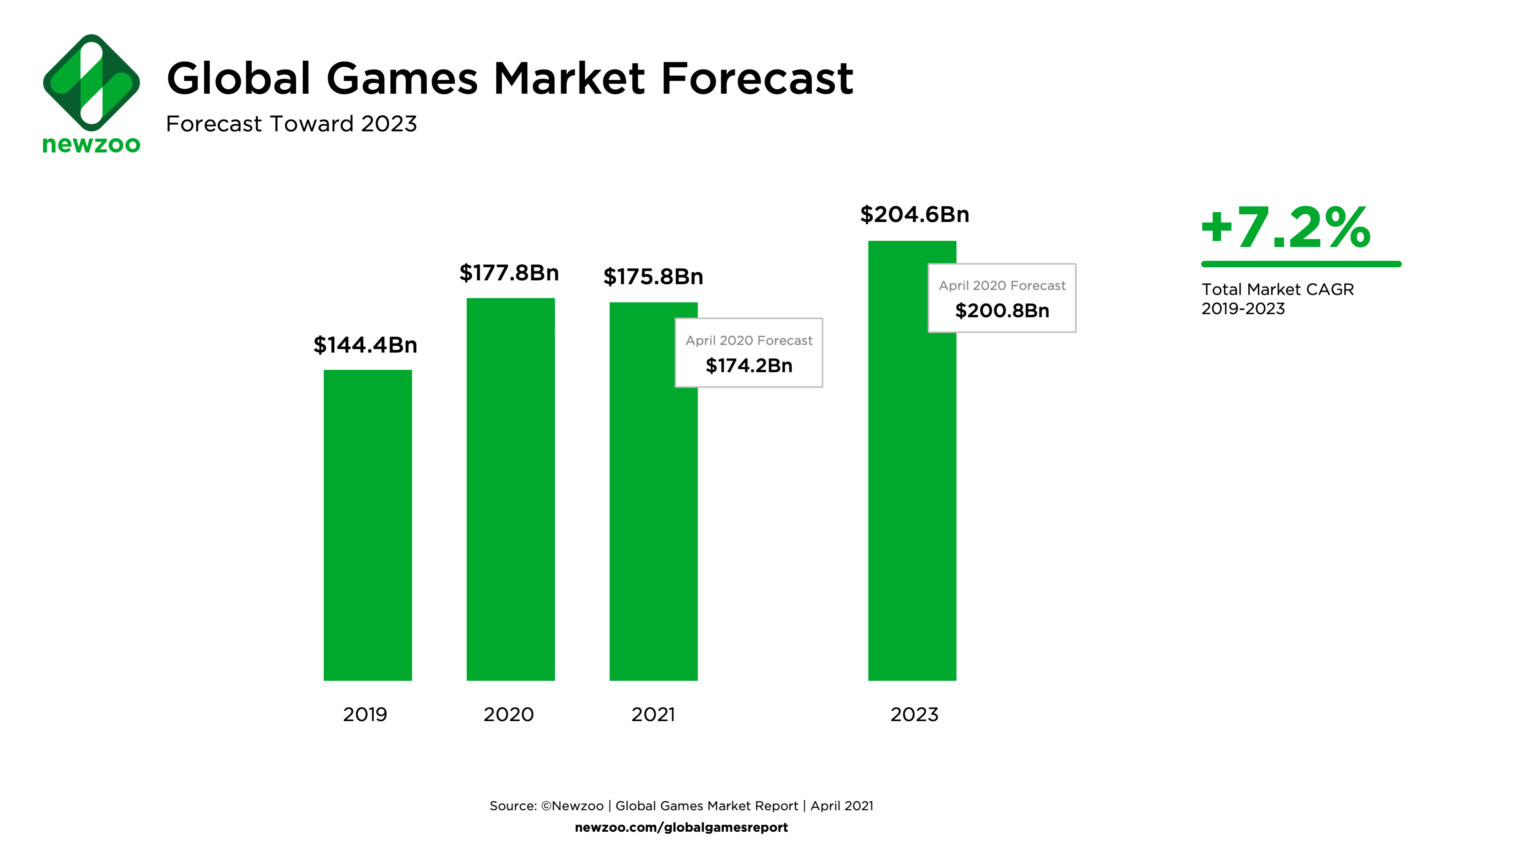 2022 promissor: mercado de games ultrapassará US$ 200 bi até 2023 - Forbes